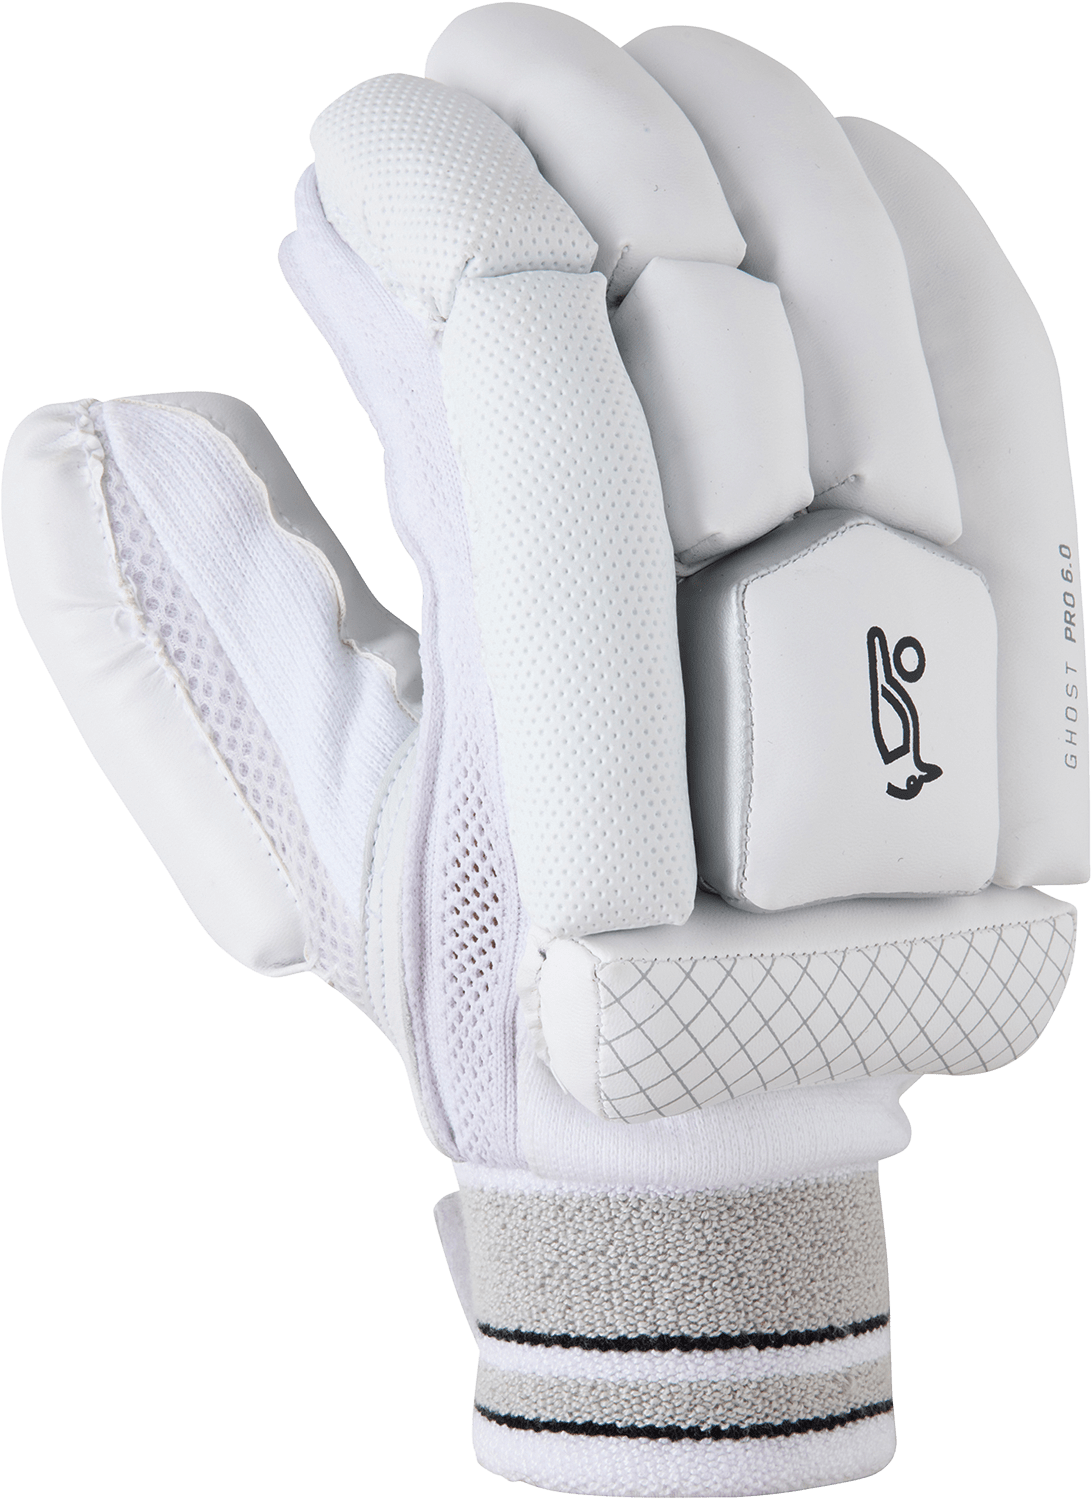 Kookaburra Gloves Kookaburra Ghost Pro 6.0 Cricket Batting Gloves